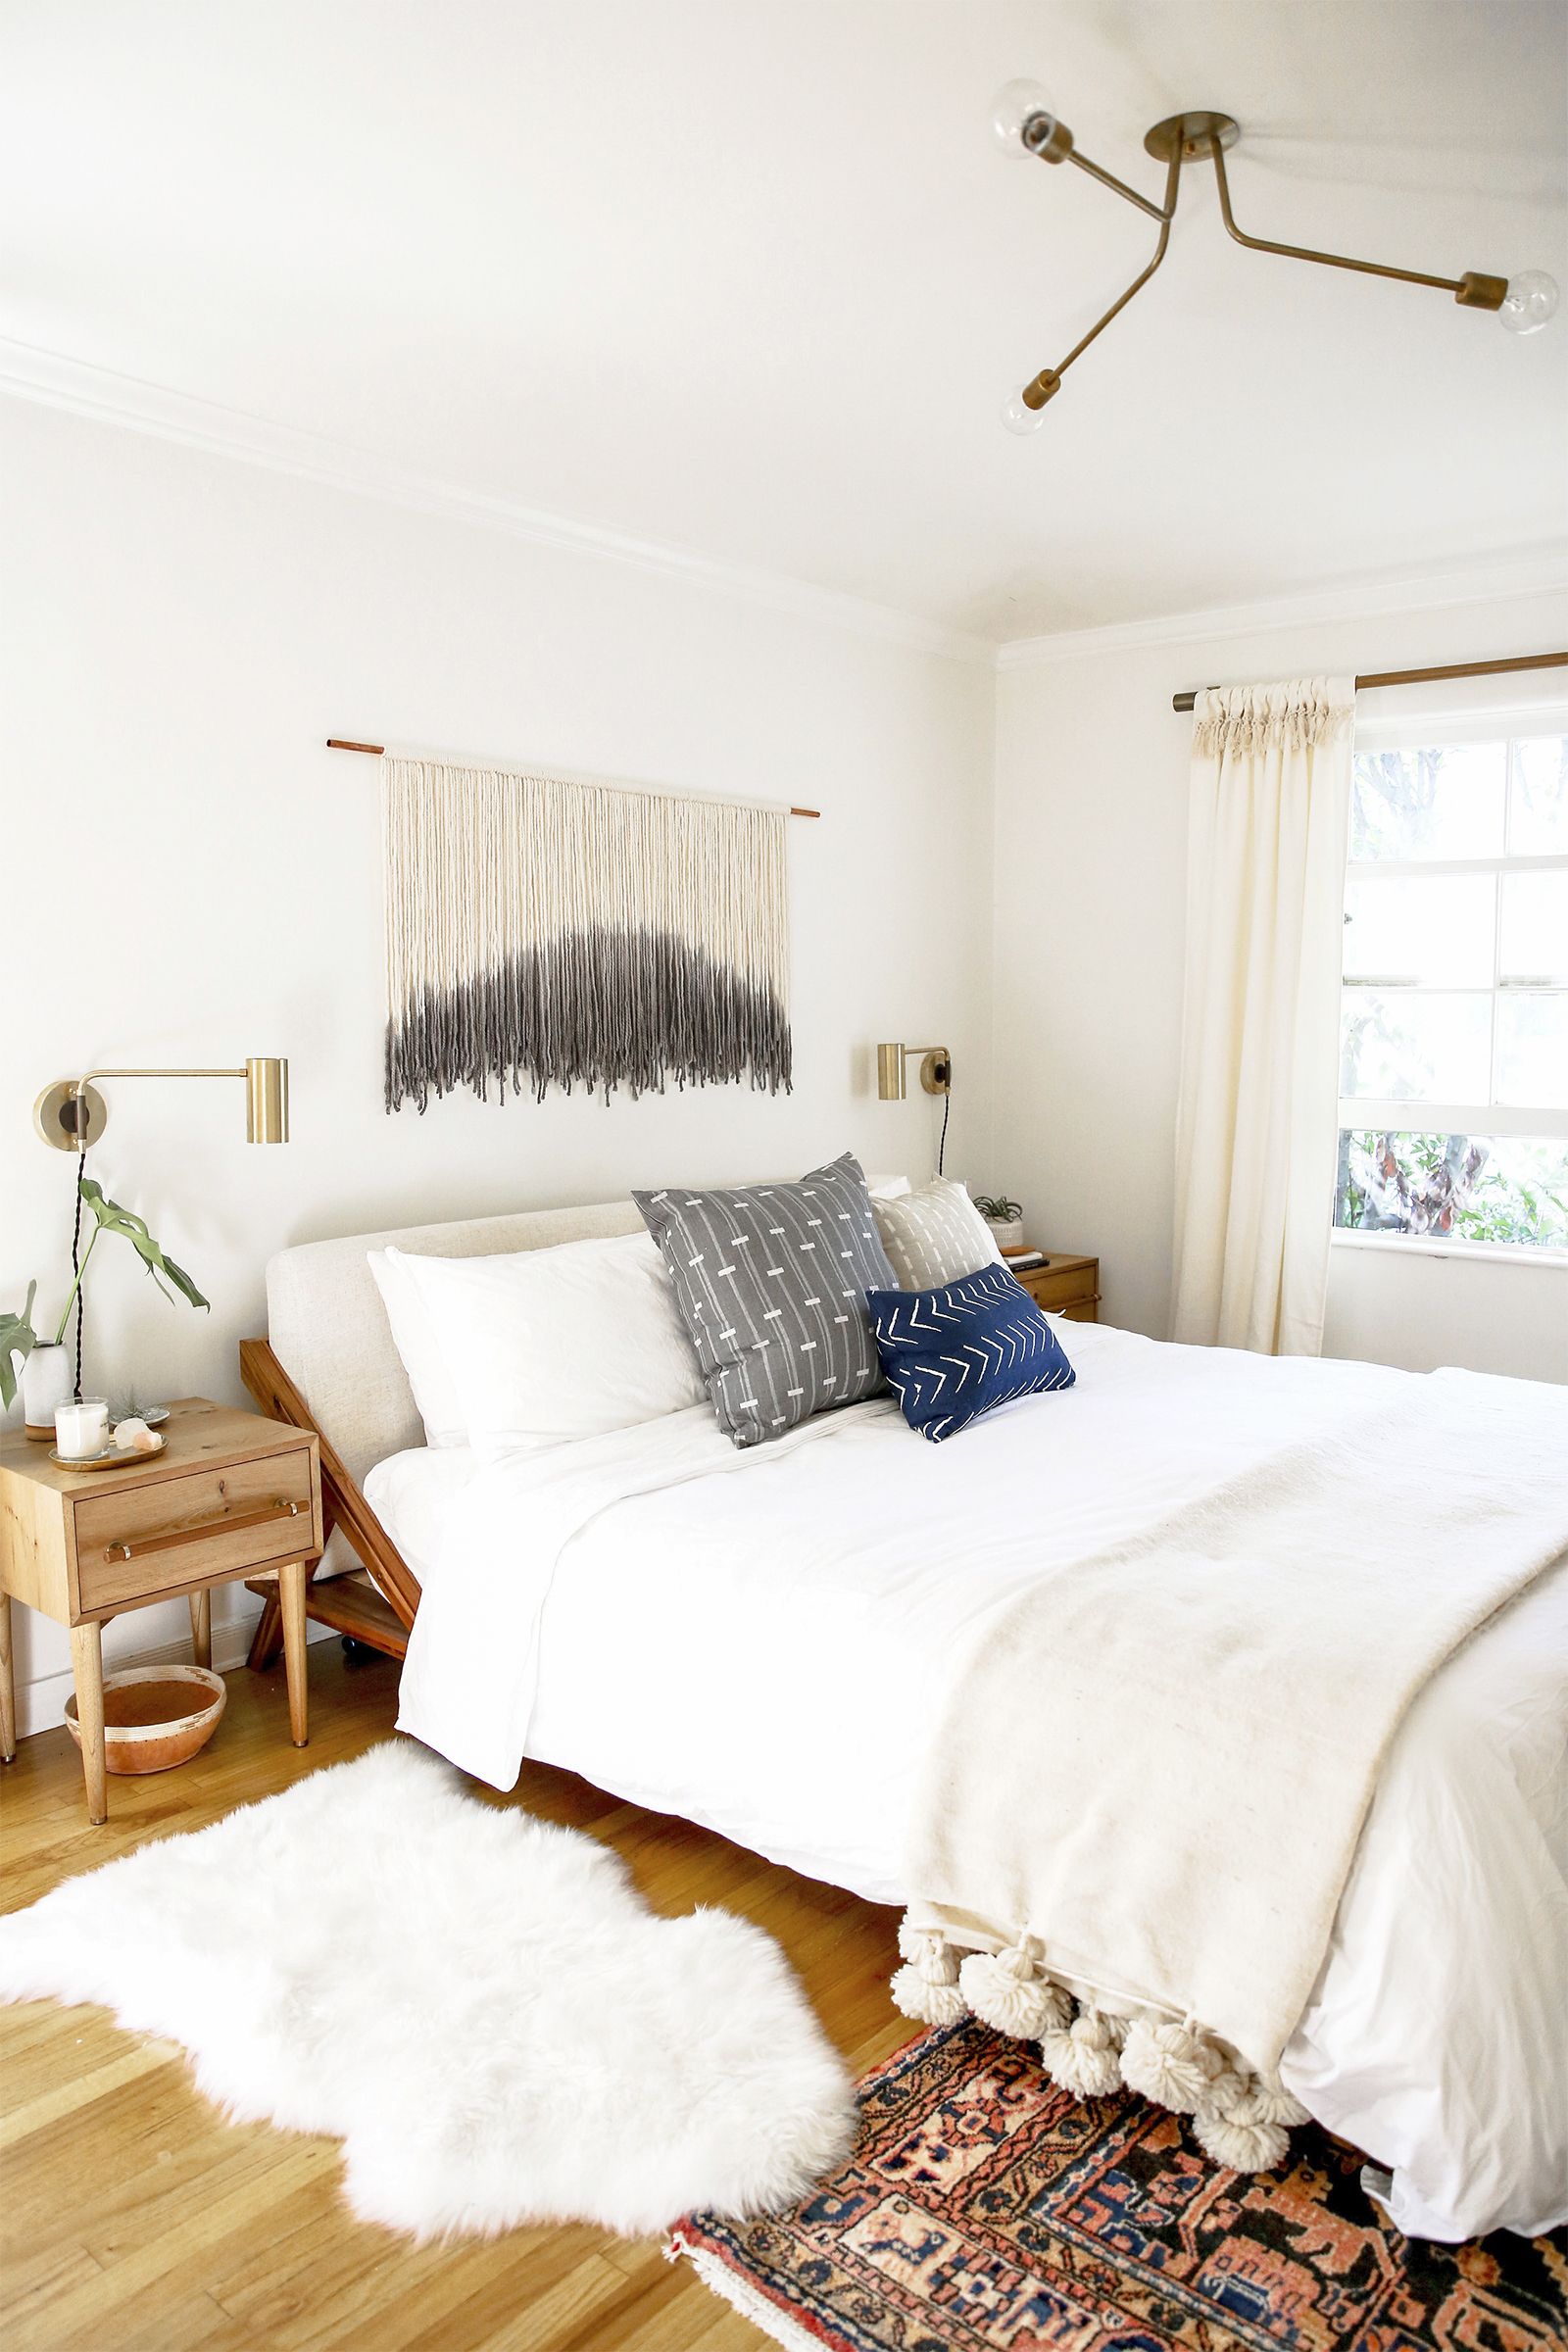 13 Boho Bedroom Ideas - Decorating A Bohemian Bedroom On A Budget